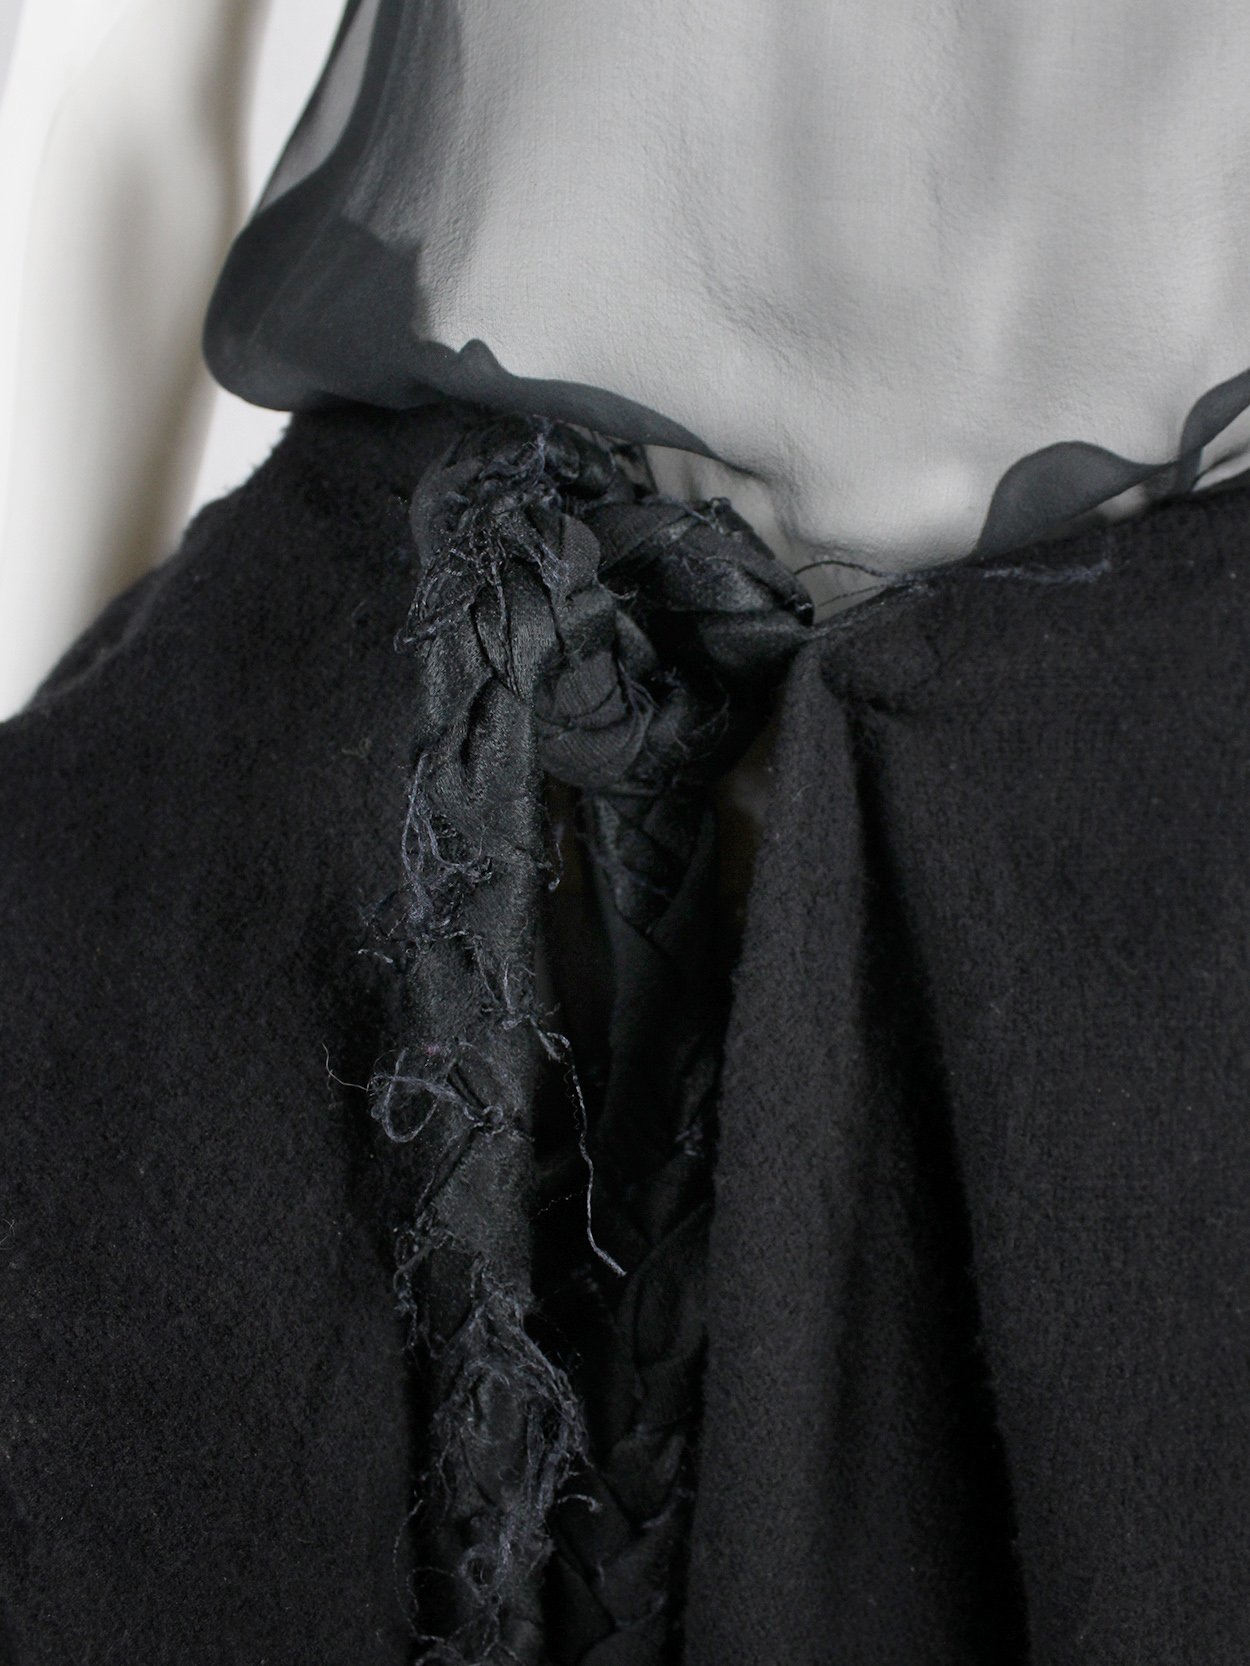 Ann Demeulemeester black heavily gathered skirt with oversized braid ...